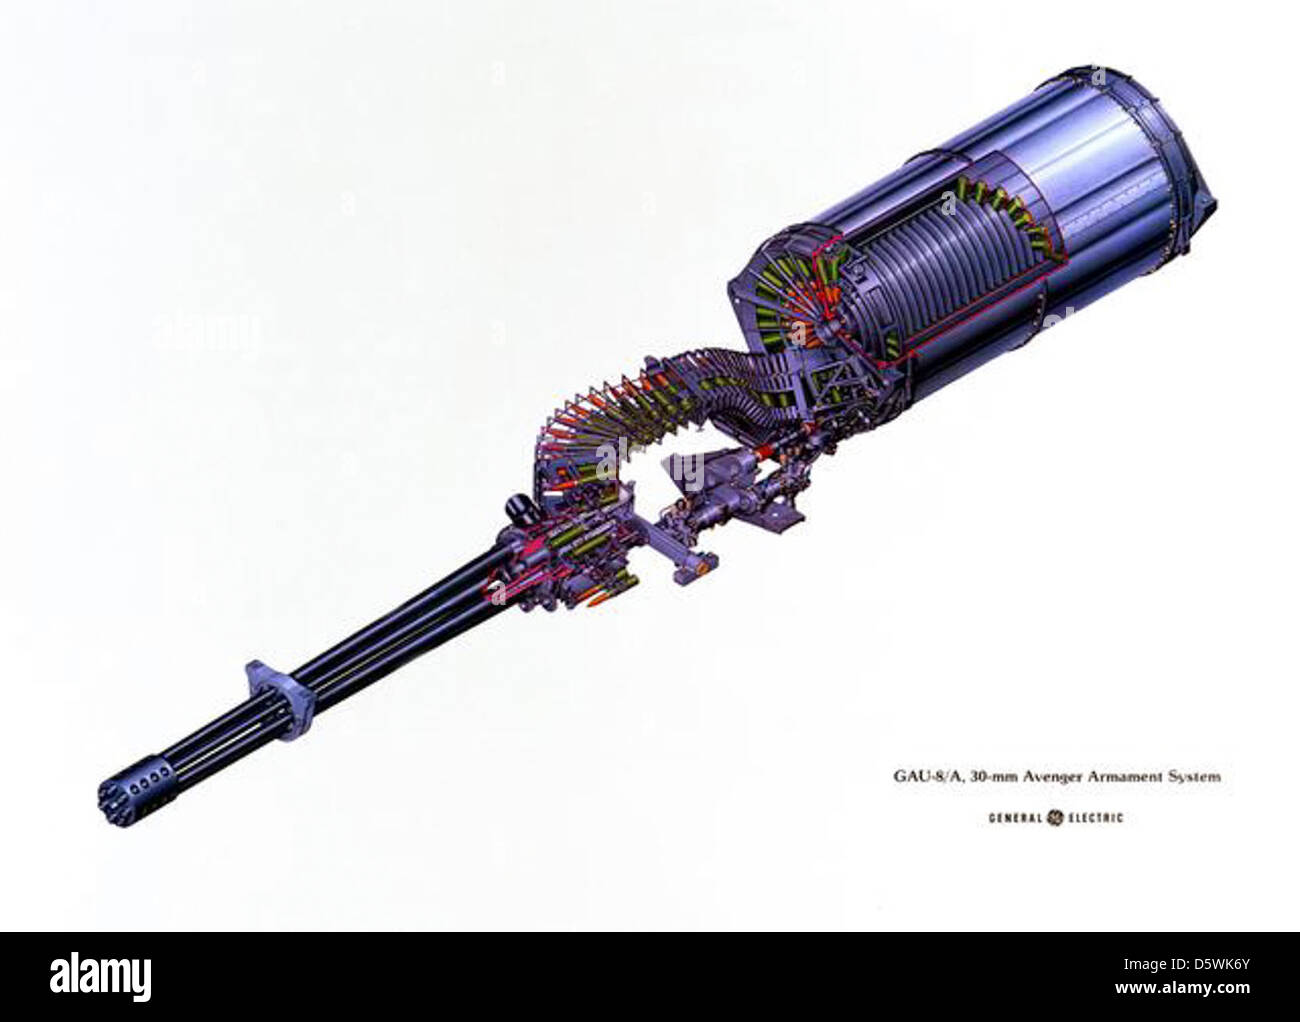 Gau 8 A 30 Mm Avenger Bewaffnung System Stockfotografie Alamy